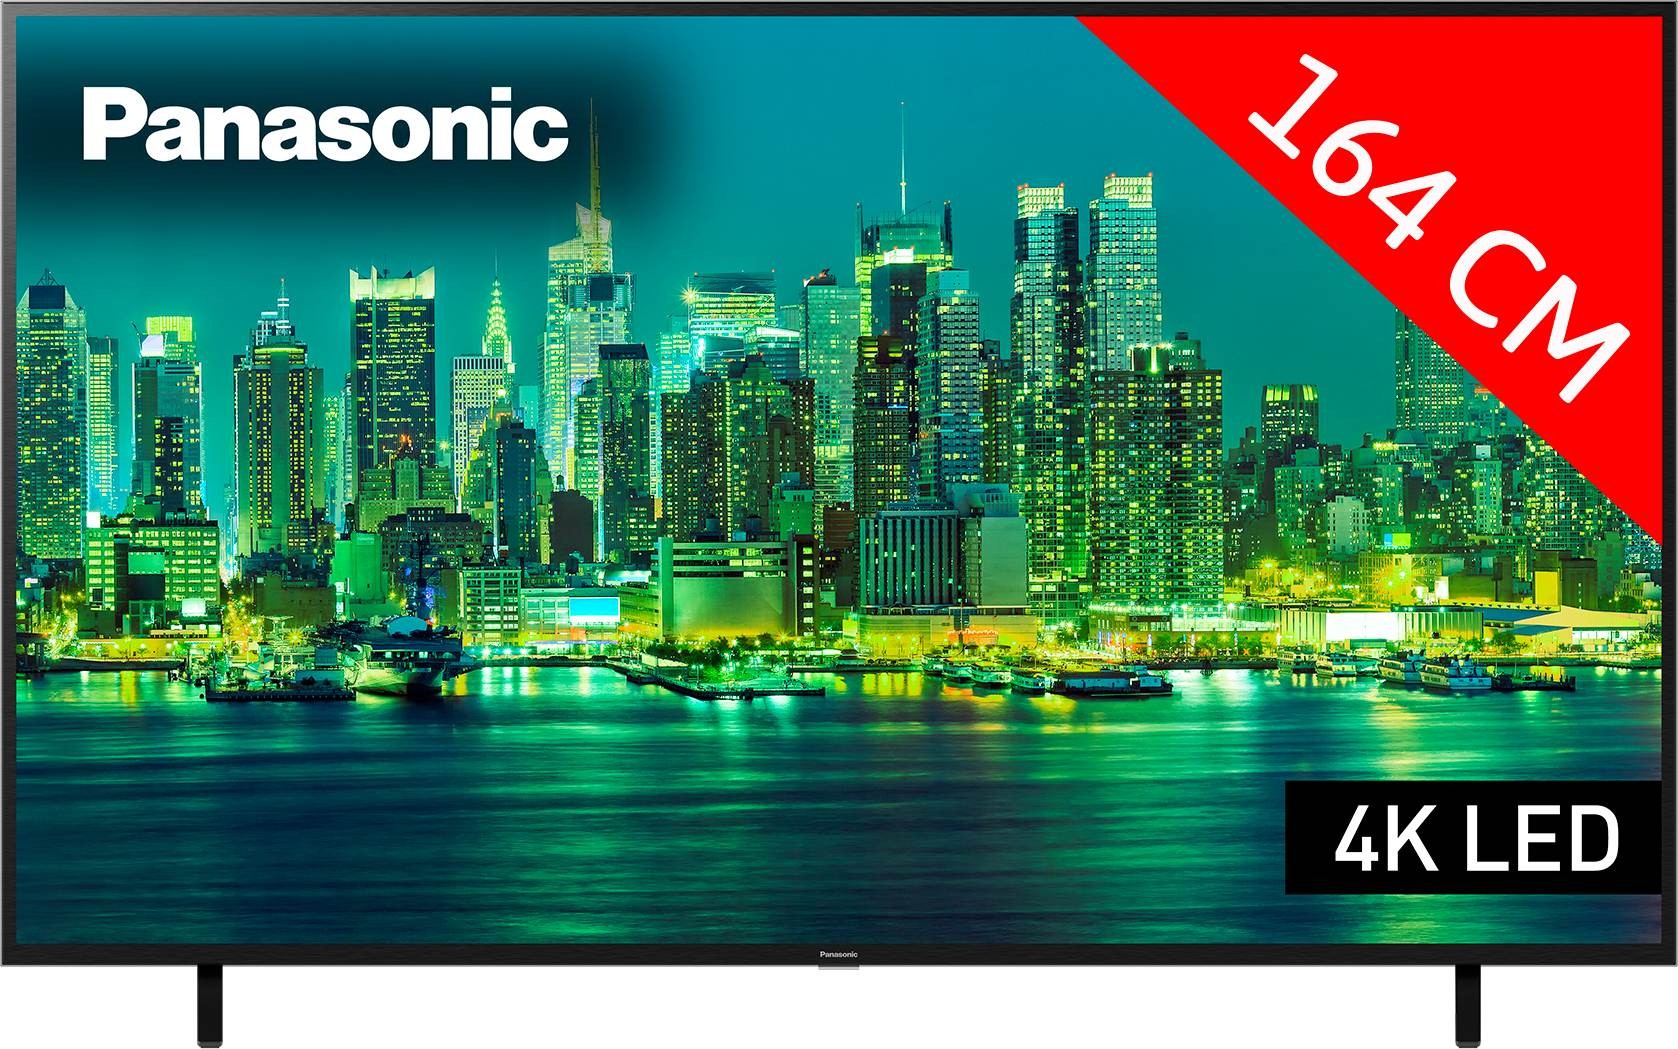 PANASONIC TV LED 4K 164 cm 50Hz HDR10+ Dolby Vision  65"  TX-65LX700E